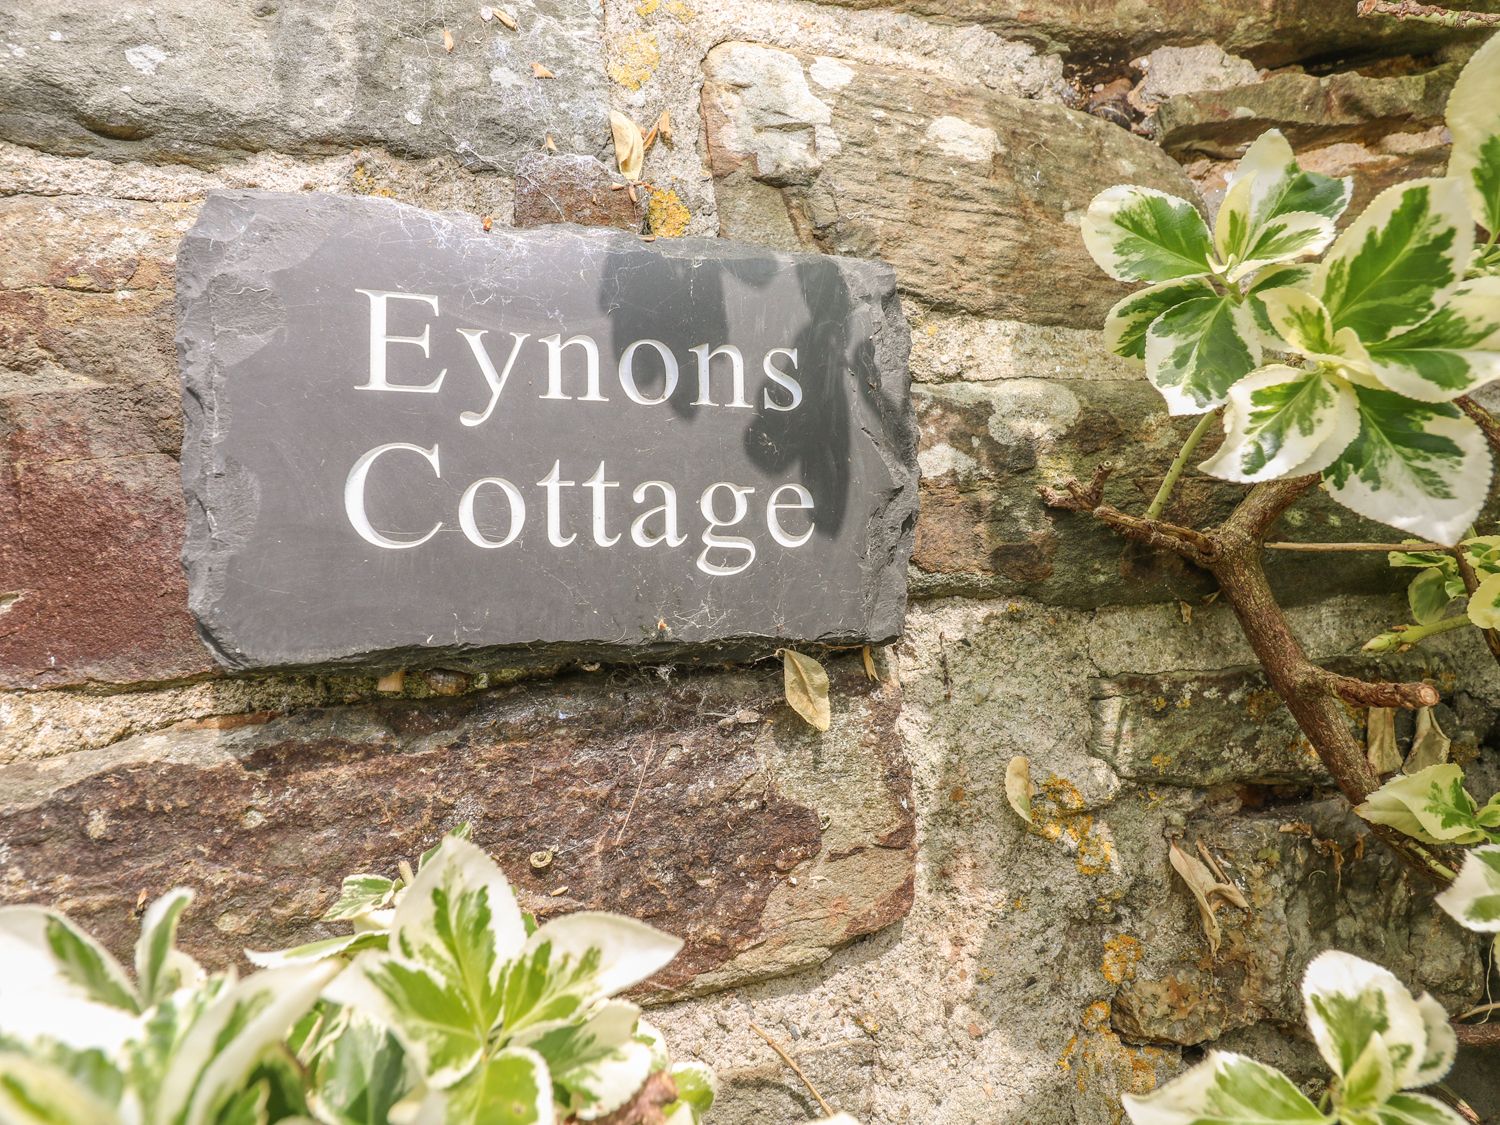 Eynons Cottage, Wales